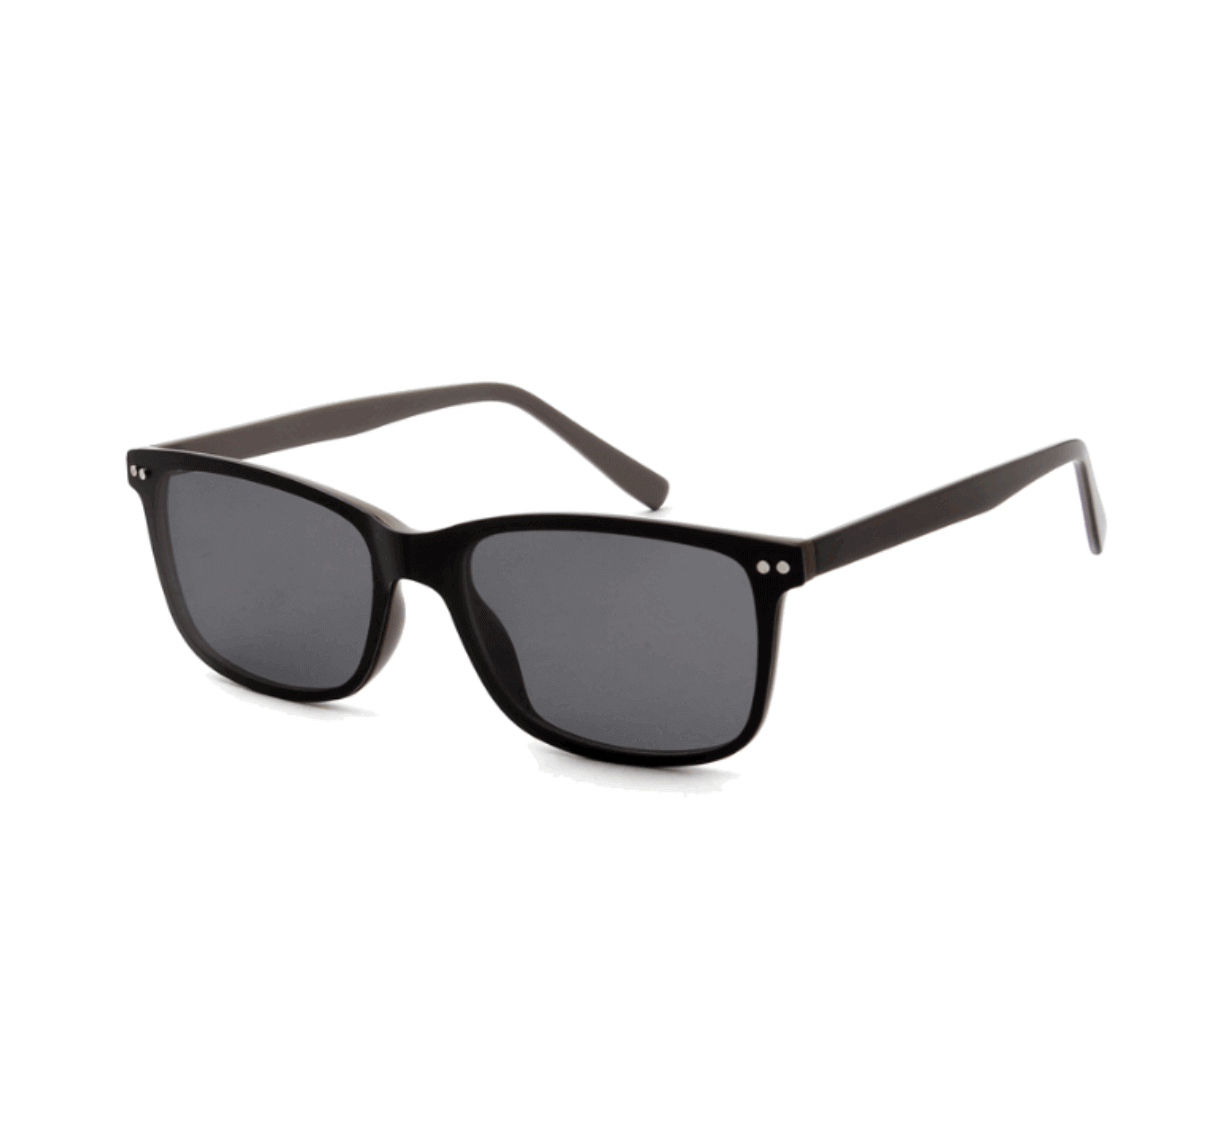 custom plastic sunglasses in bulk, custom sunglasses with logo, custom sunglasses manufacturers China, custom sunglasses suppliers, Sunglasses Manufacturer